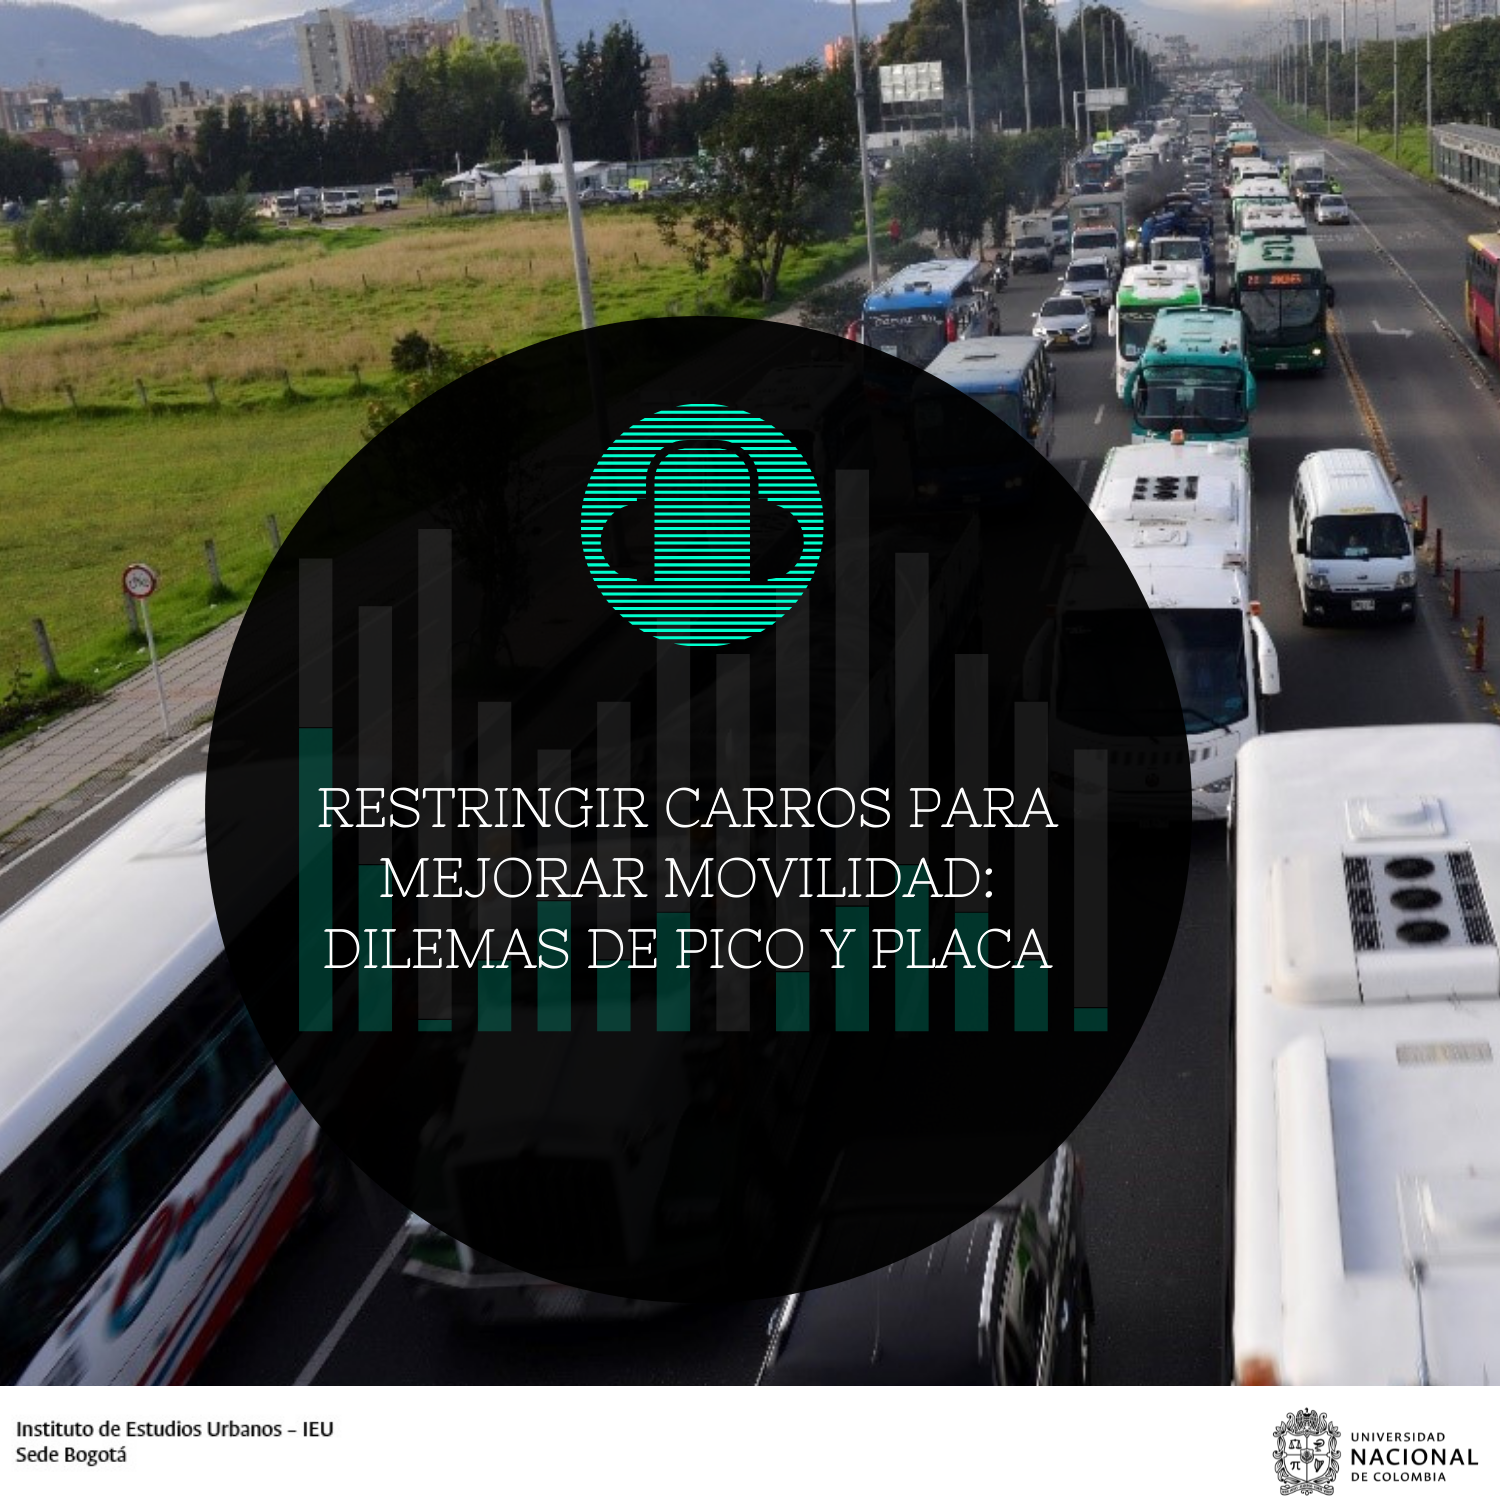 #PodcastRadioUNAL Restringir carros para mejorar movilidad: dilemas de pico y placa